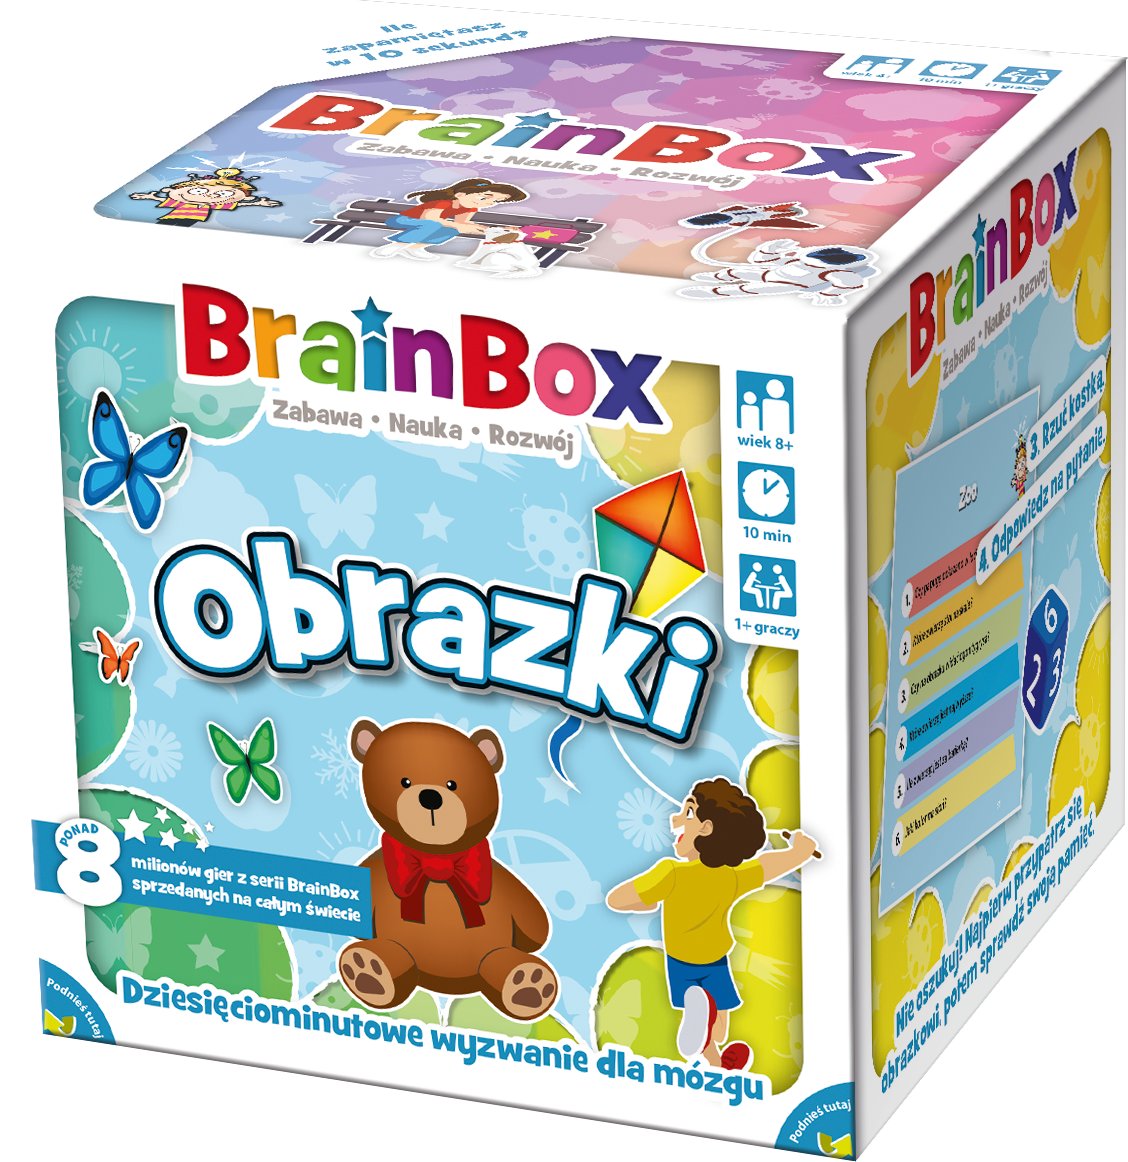 Obrazki (Brain Box), gra edukacyjna, Rebel